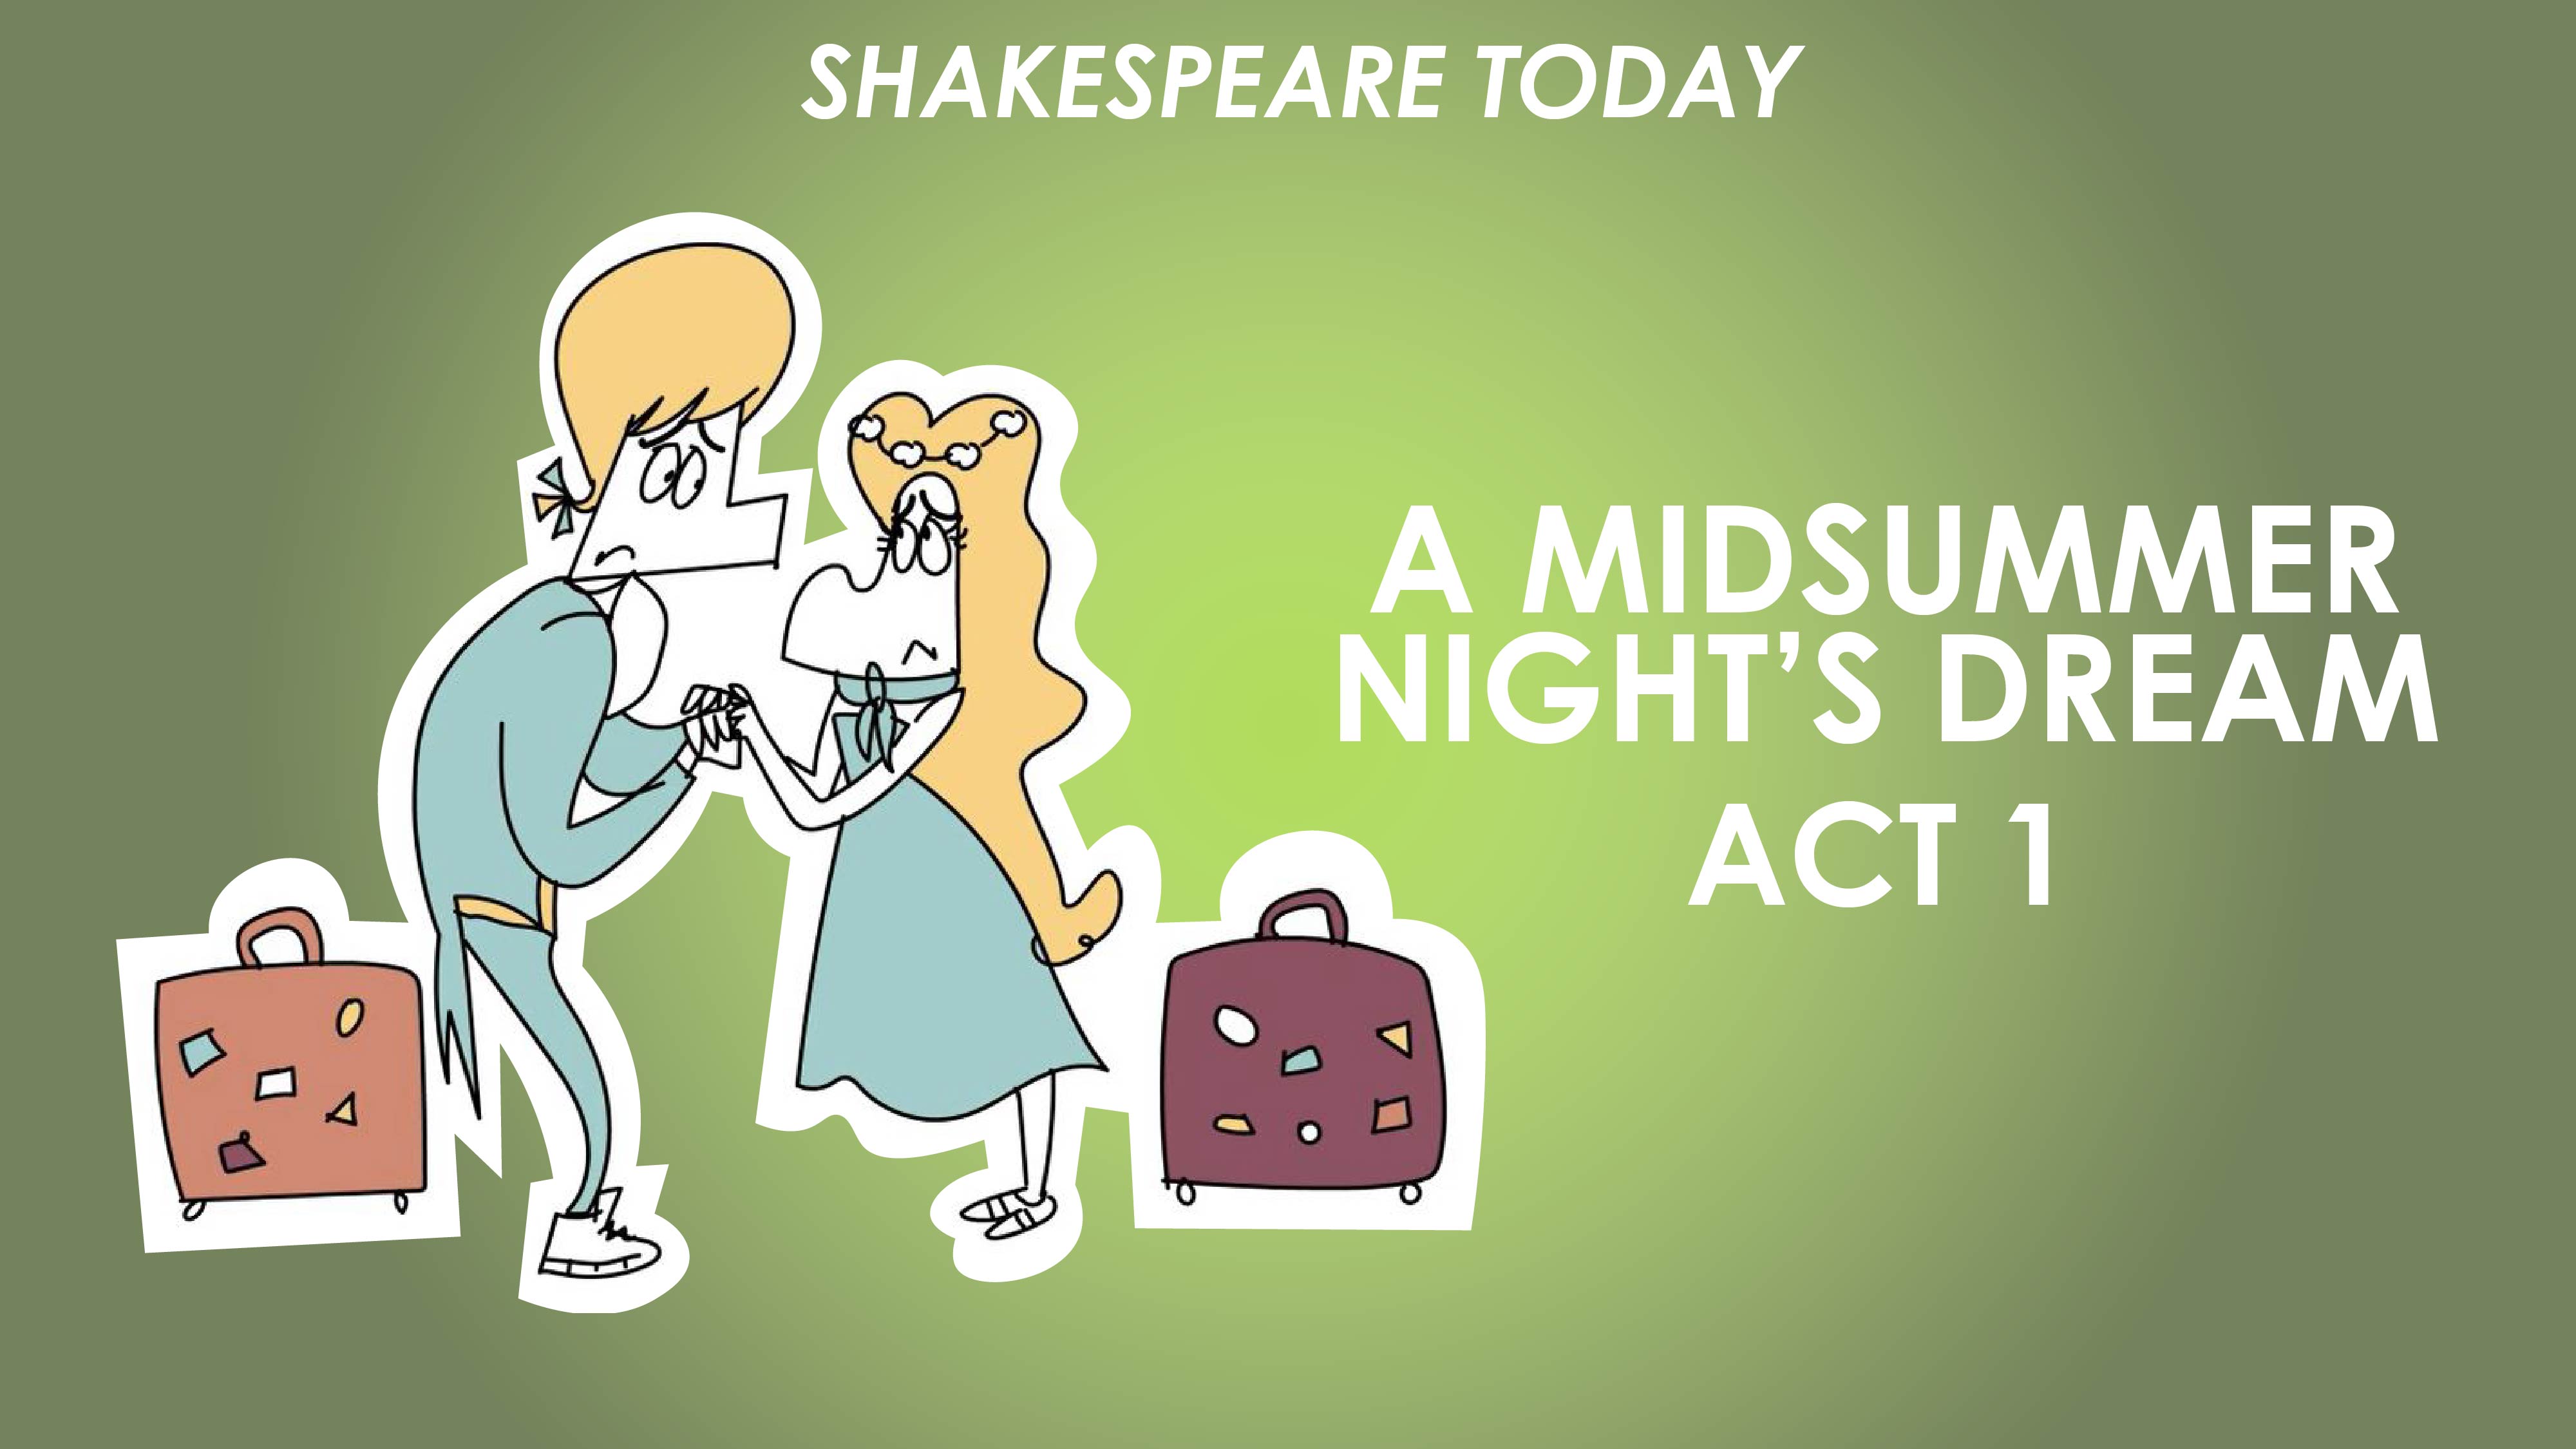 A Midsummer Night's Dream Act 1 Summary - Shakespeare Today Series